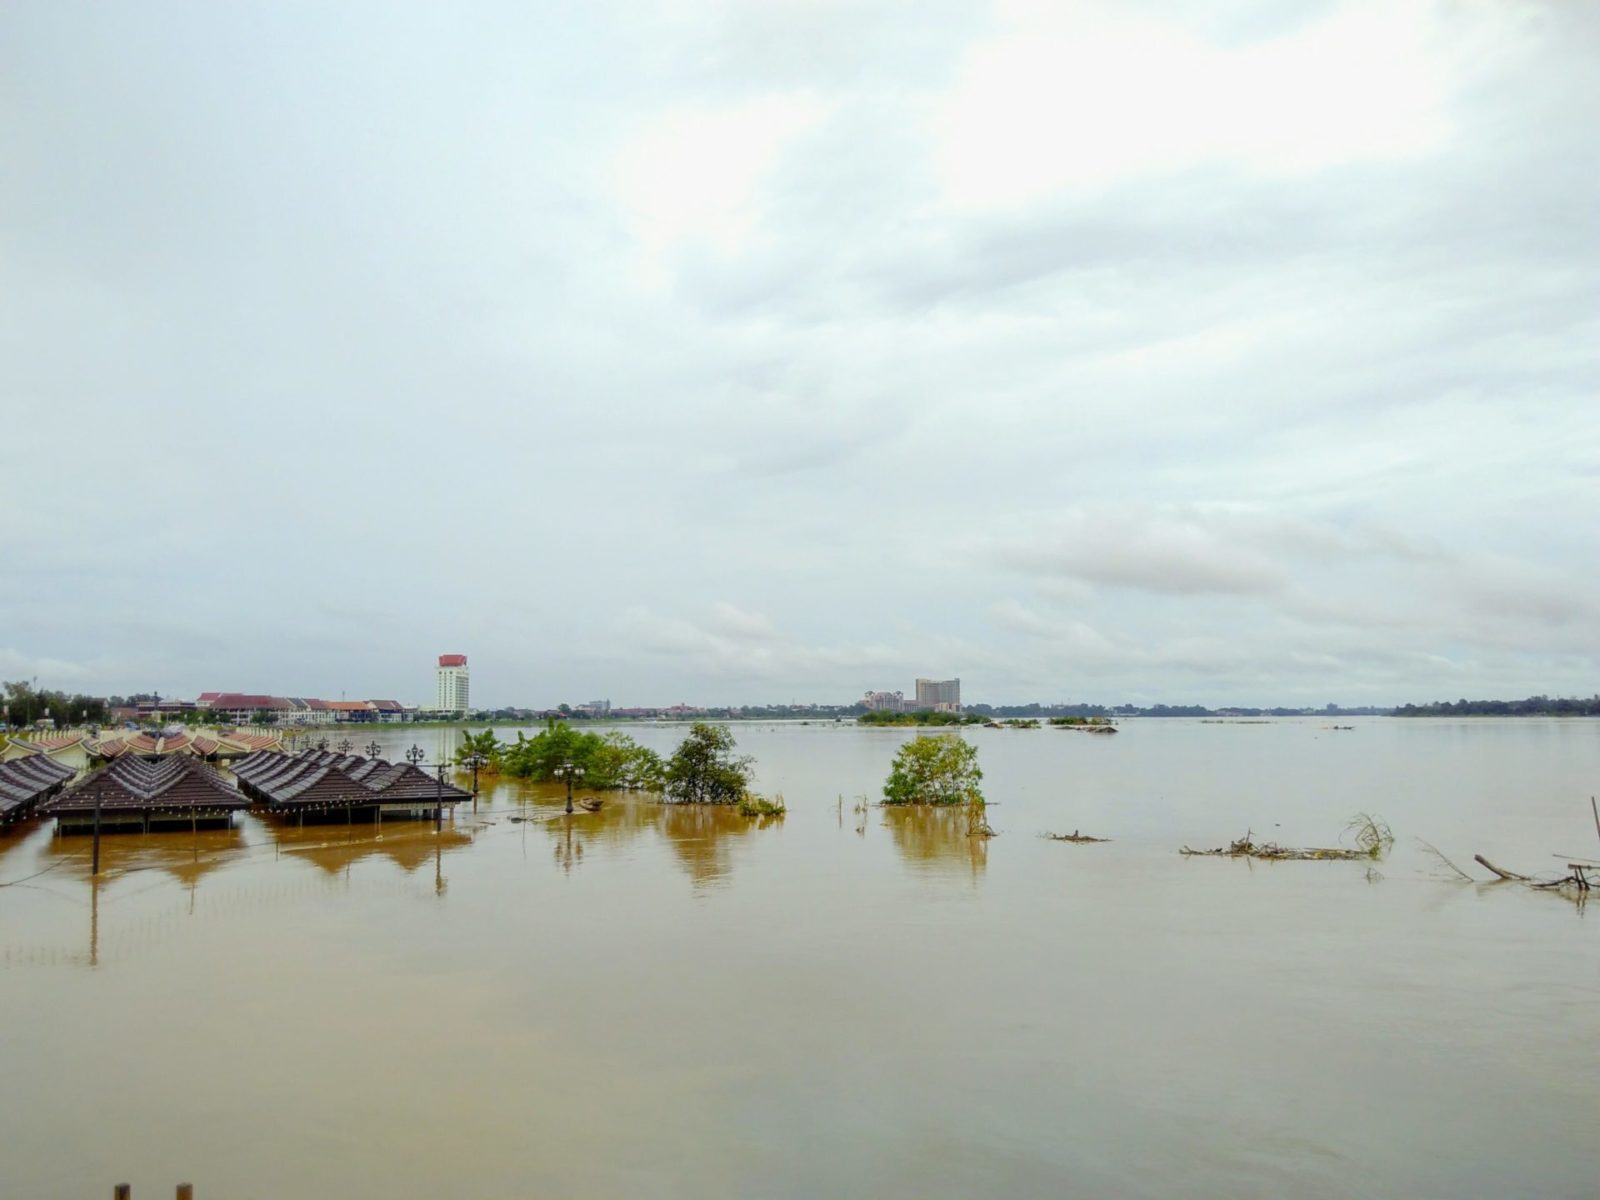 Laos Waldschutz Klimaziel